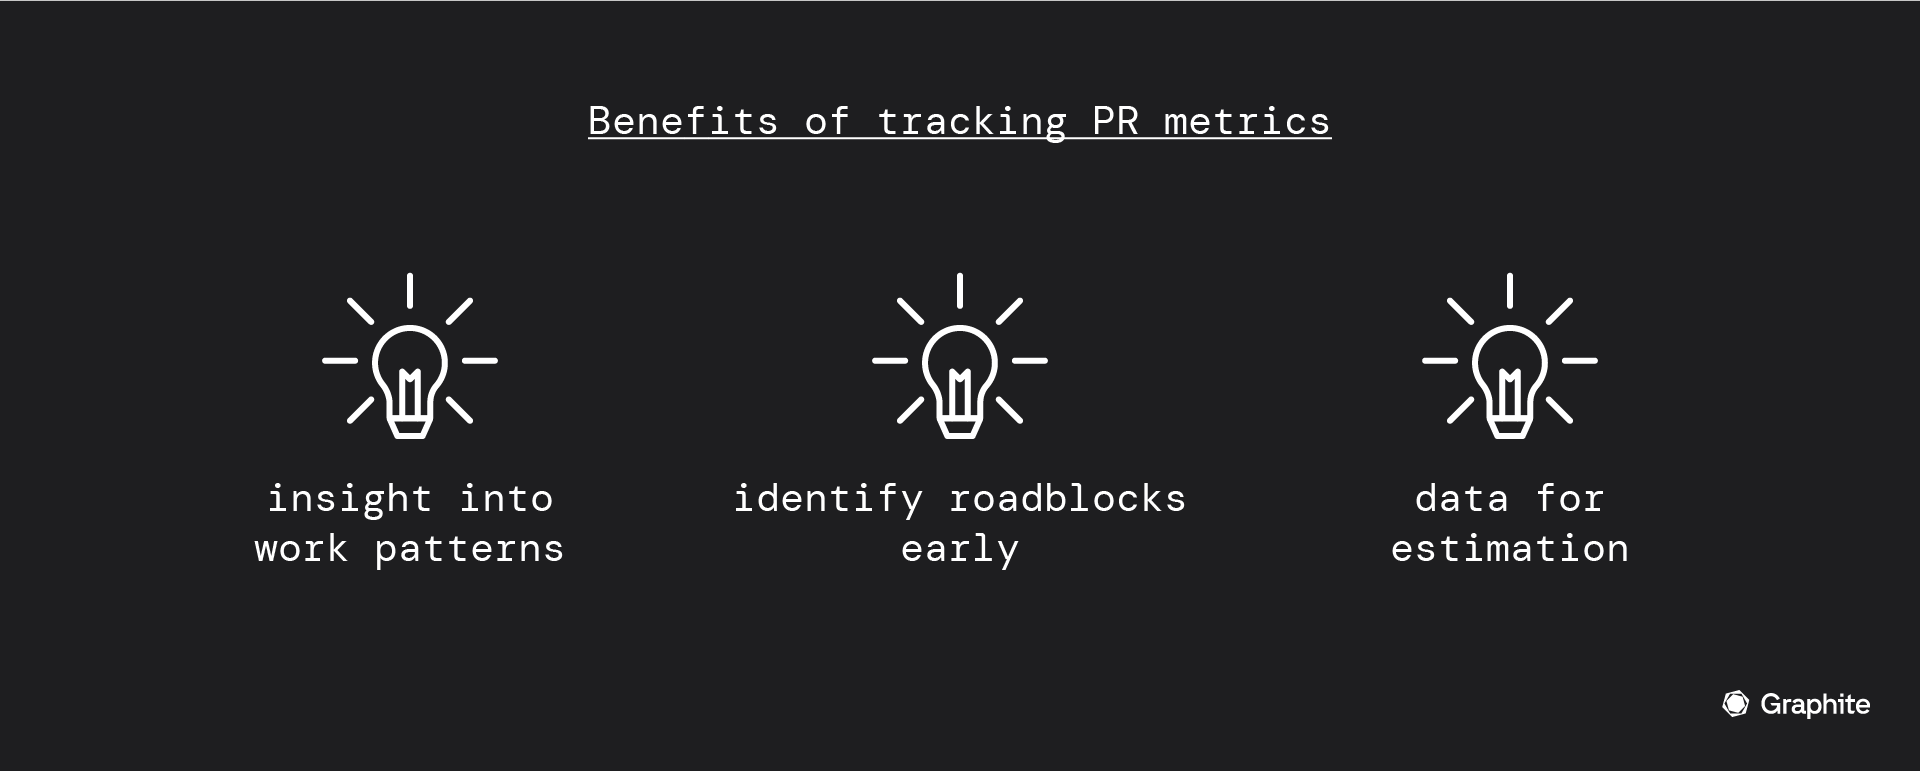 Benefits of tracking PR metrics: insight into work patterns; identify roadblocks early; data for estimation